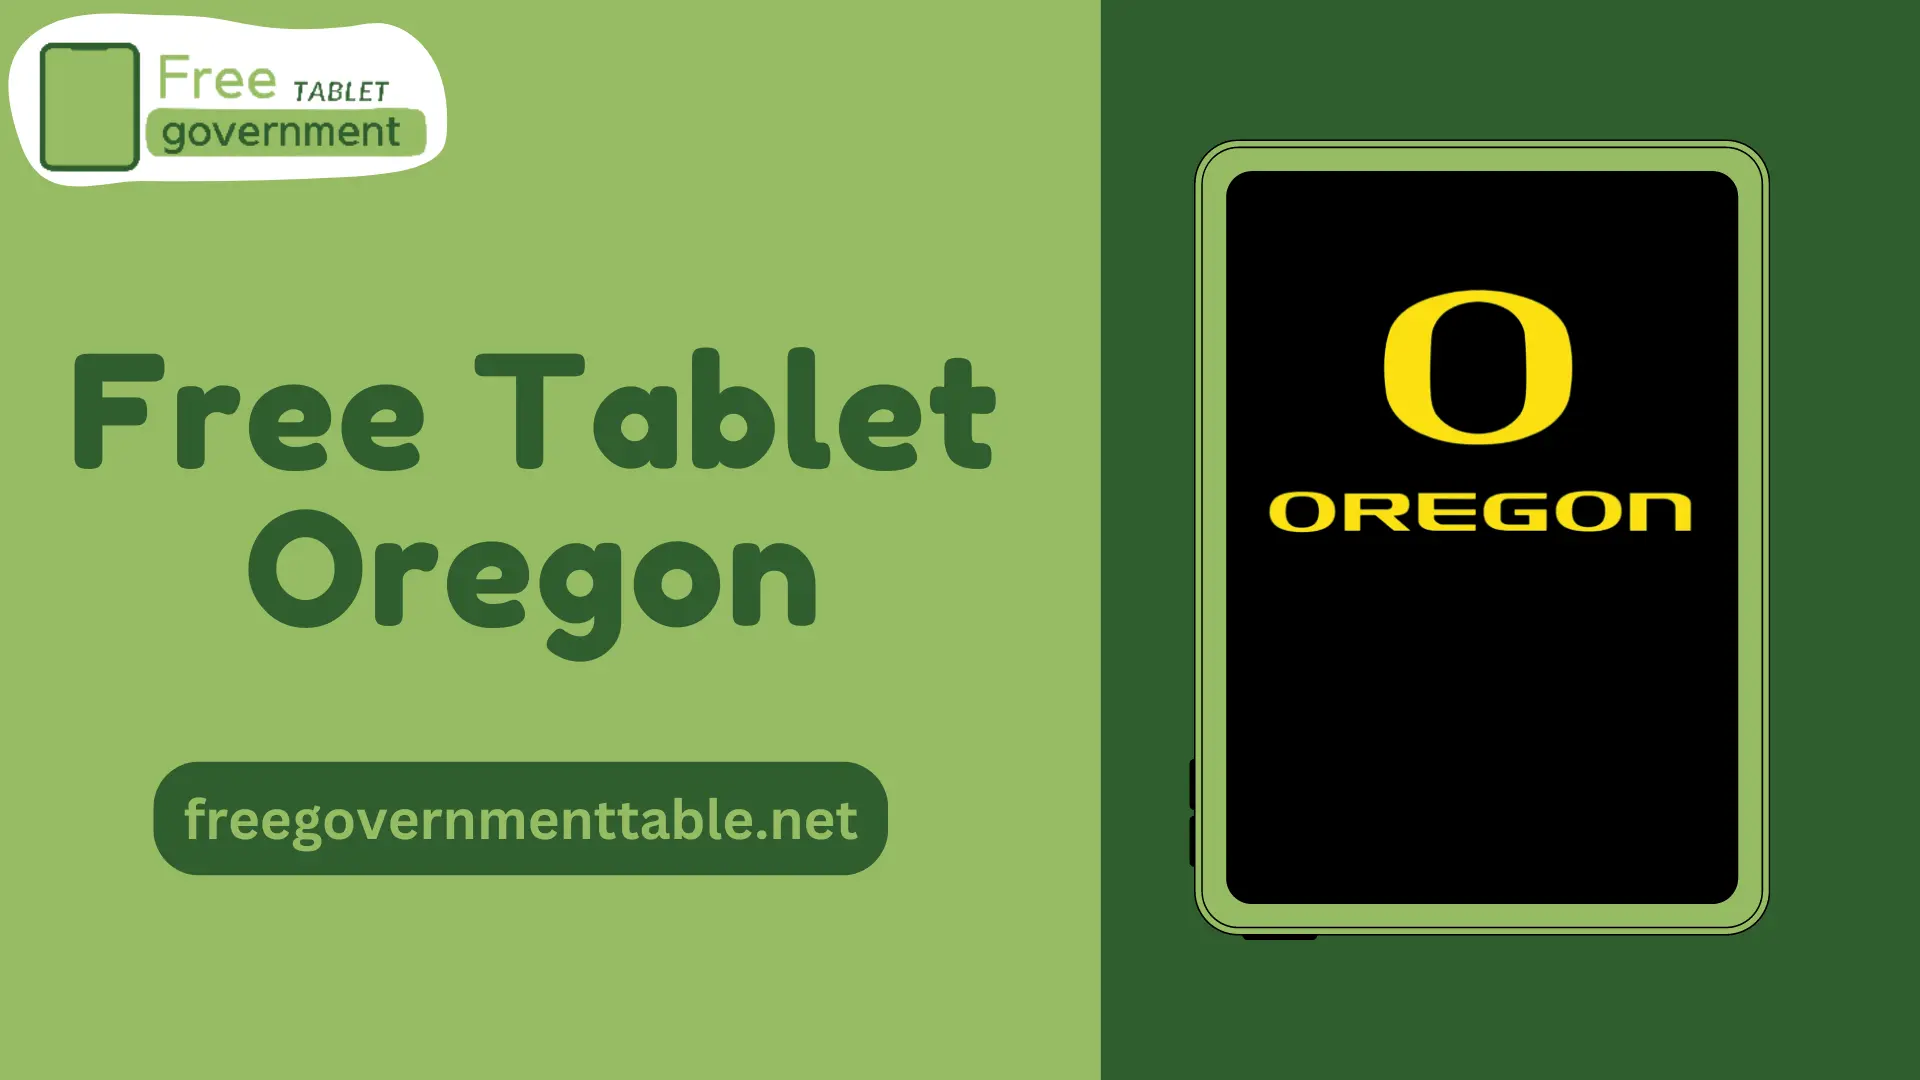 Free Tablet Oregon